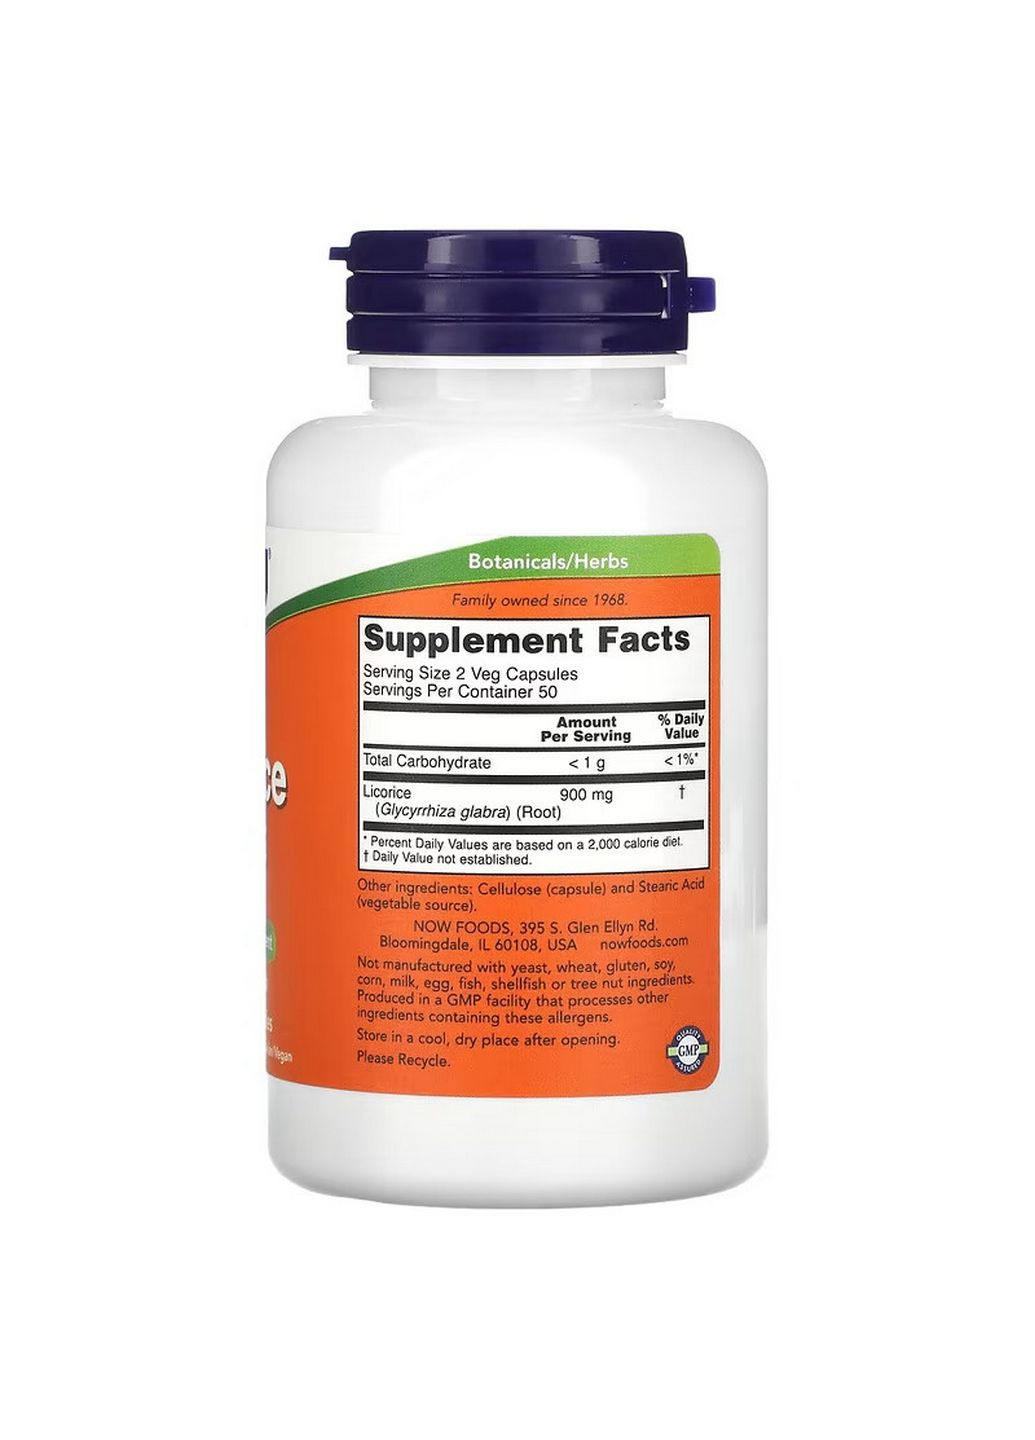 Натуральная добавка Licorice Root 450 mg, 100 вегакапсул Now (293418572)